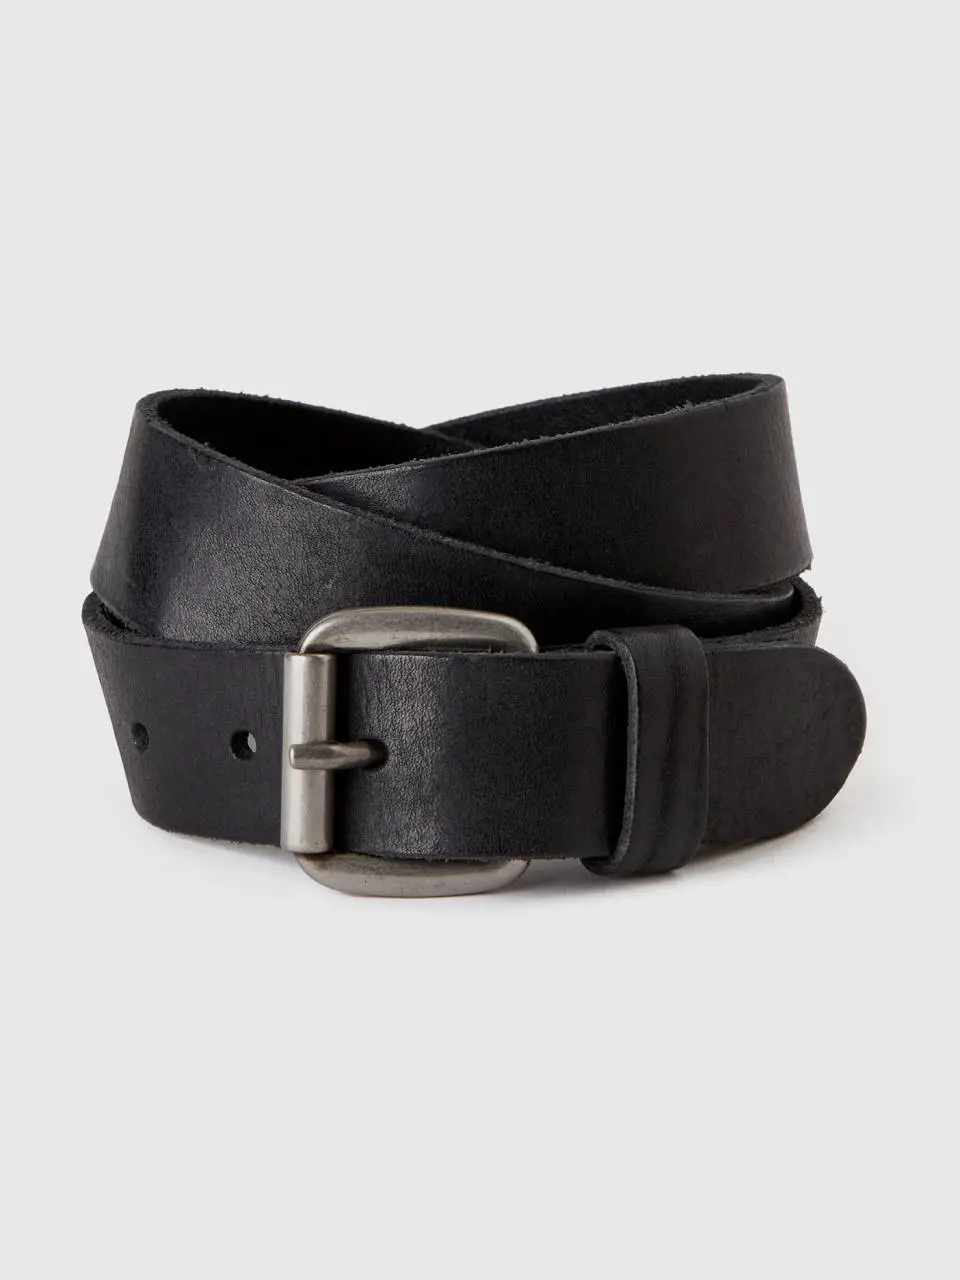 Benetton genuine leather belt. 1